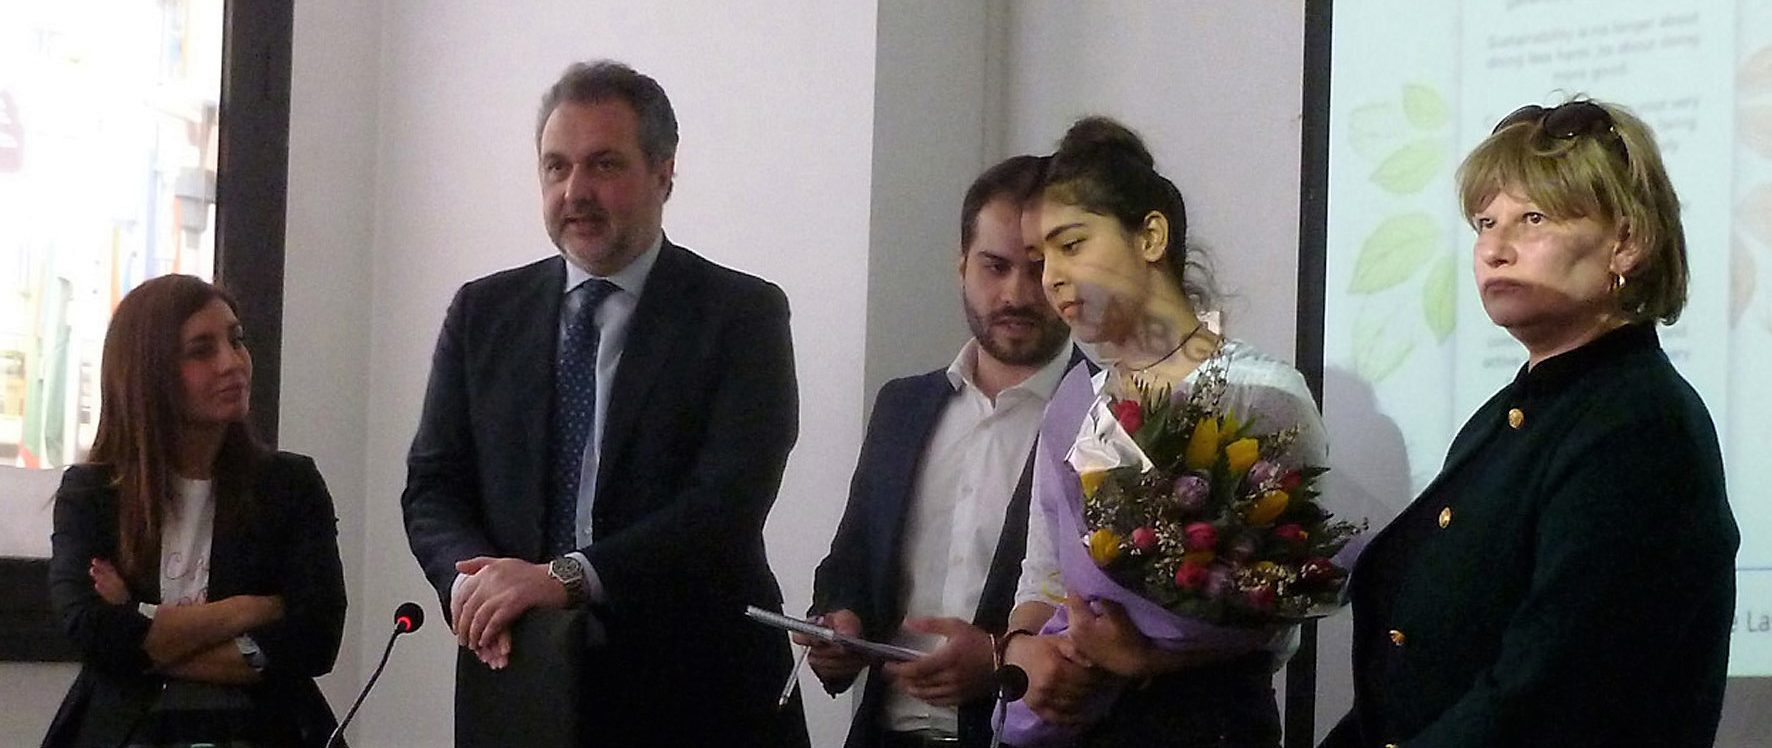 Da sinistra: Elena Scordamaglia, Massimiliano Pierini, Kirti Lakhera, Olivia Carone